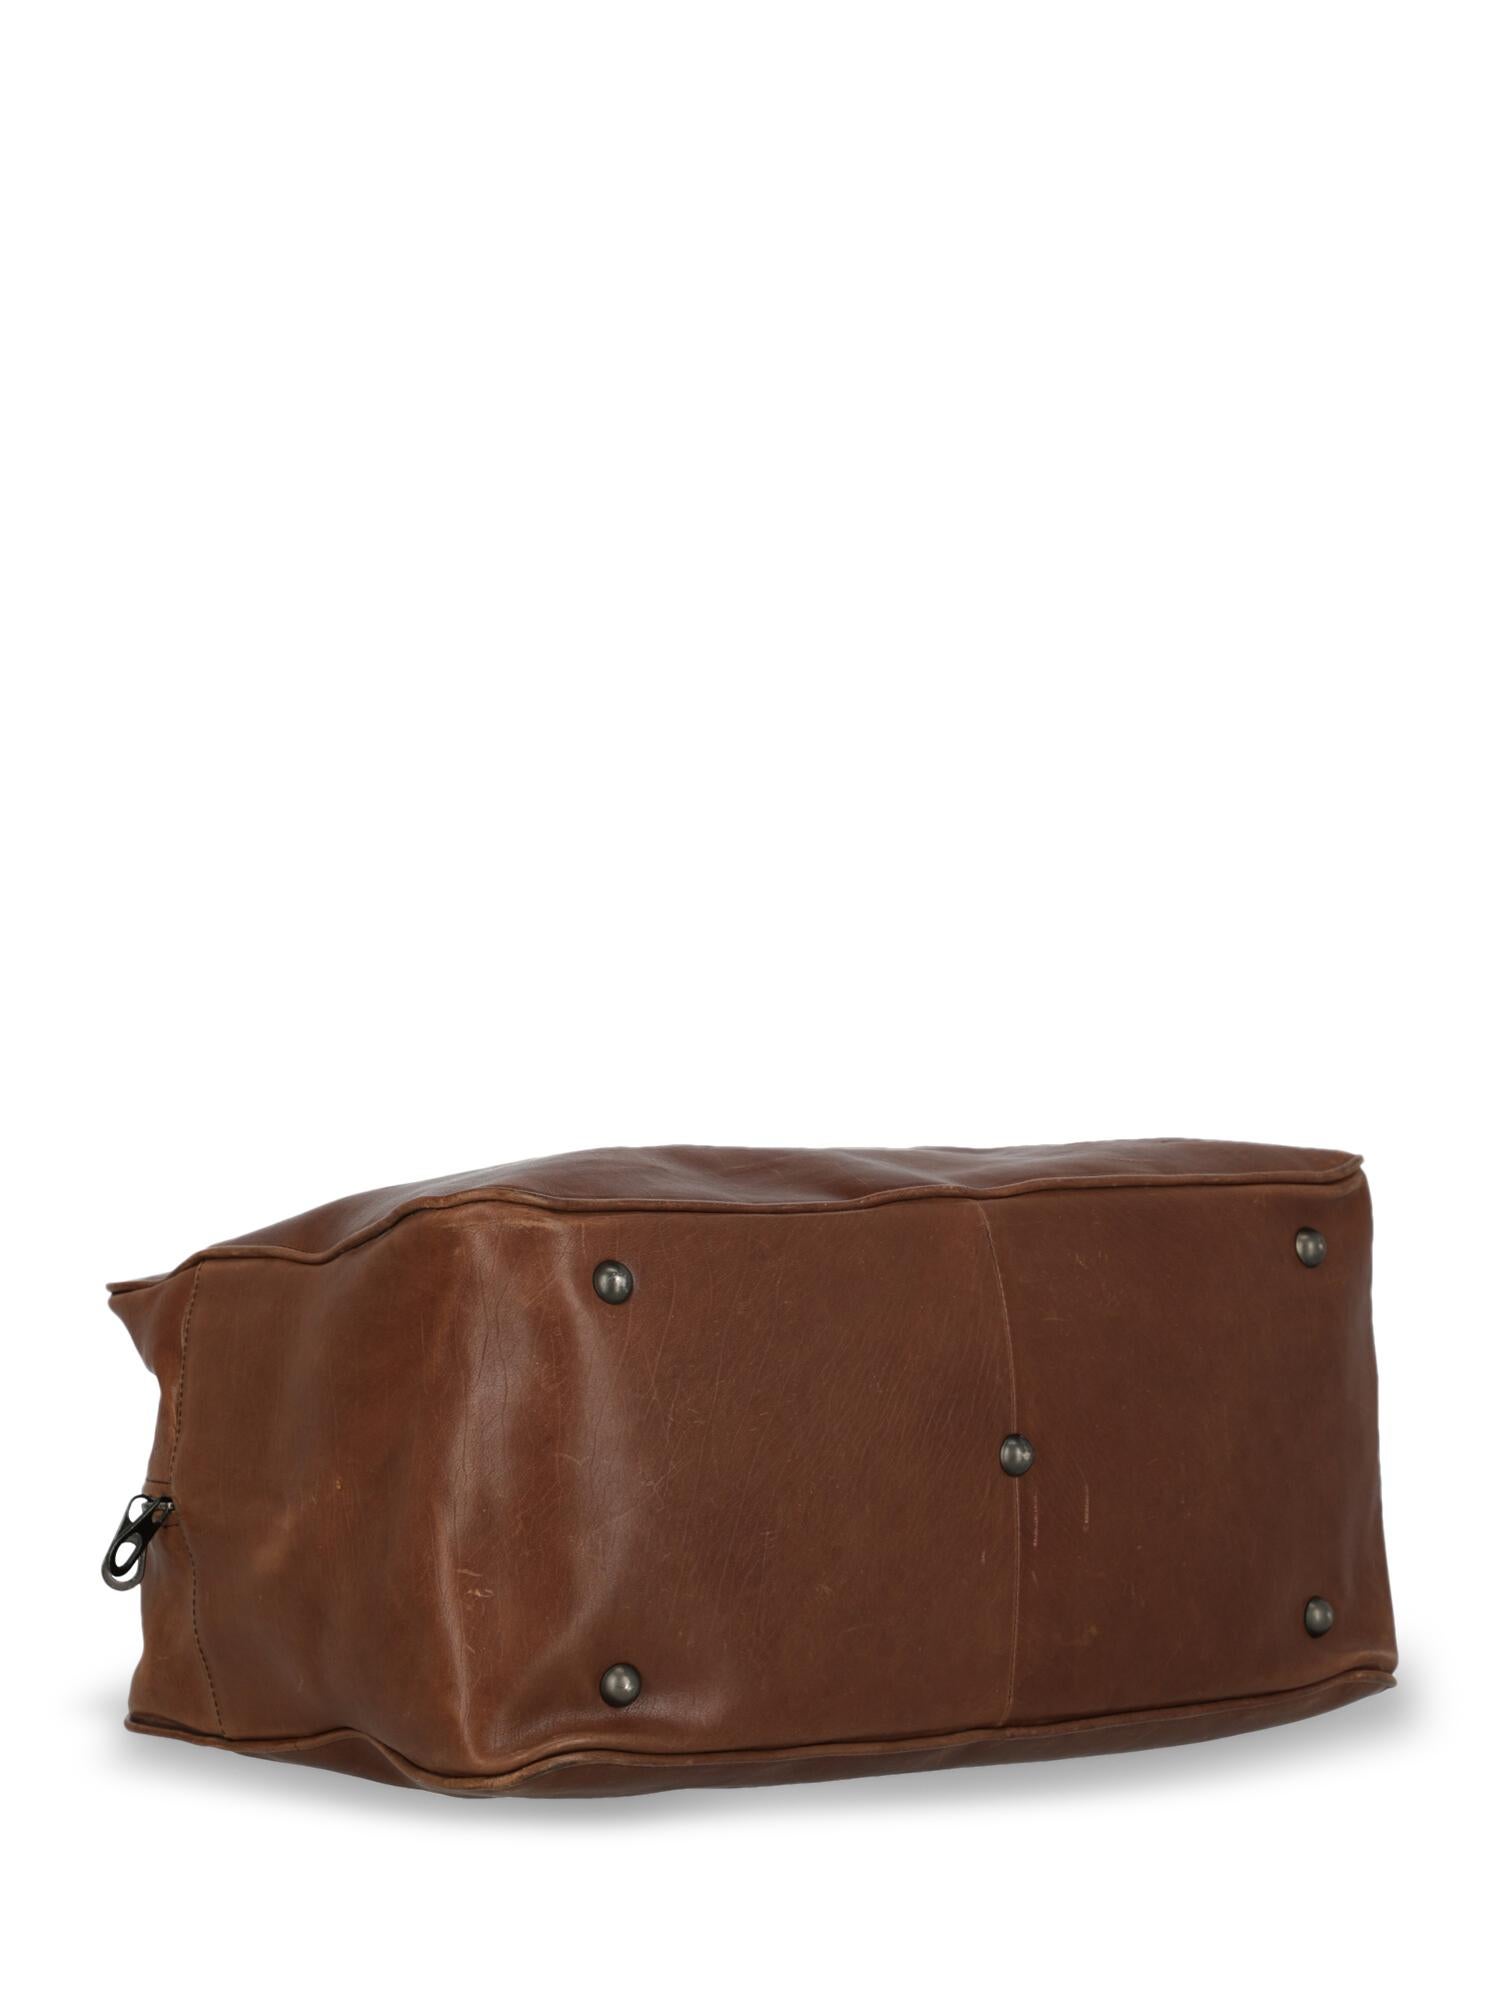 Bottega Veneta Woman Handbag Brown  For Sale 1